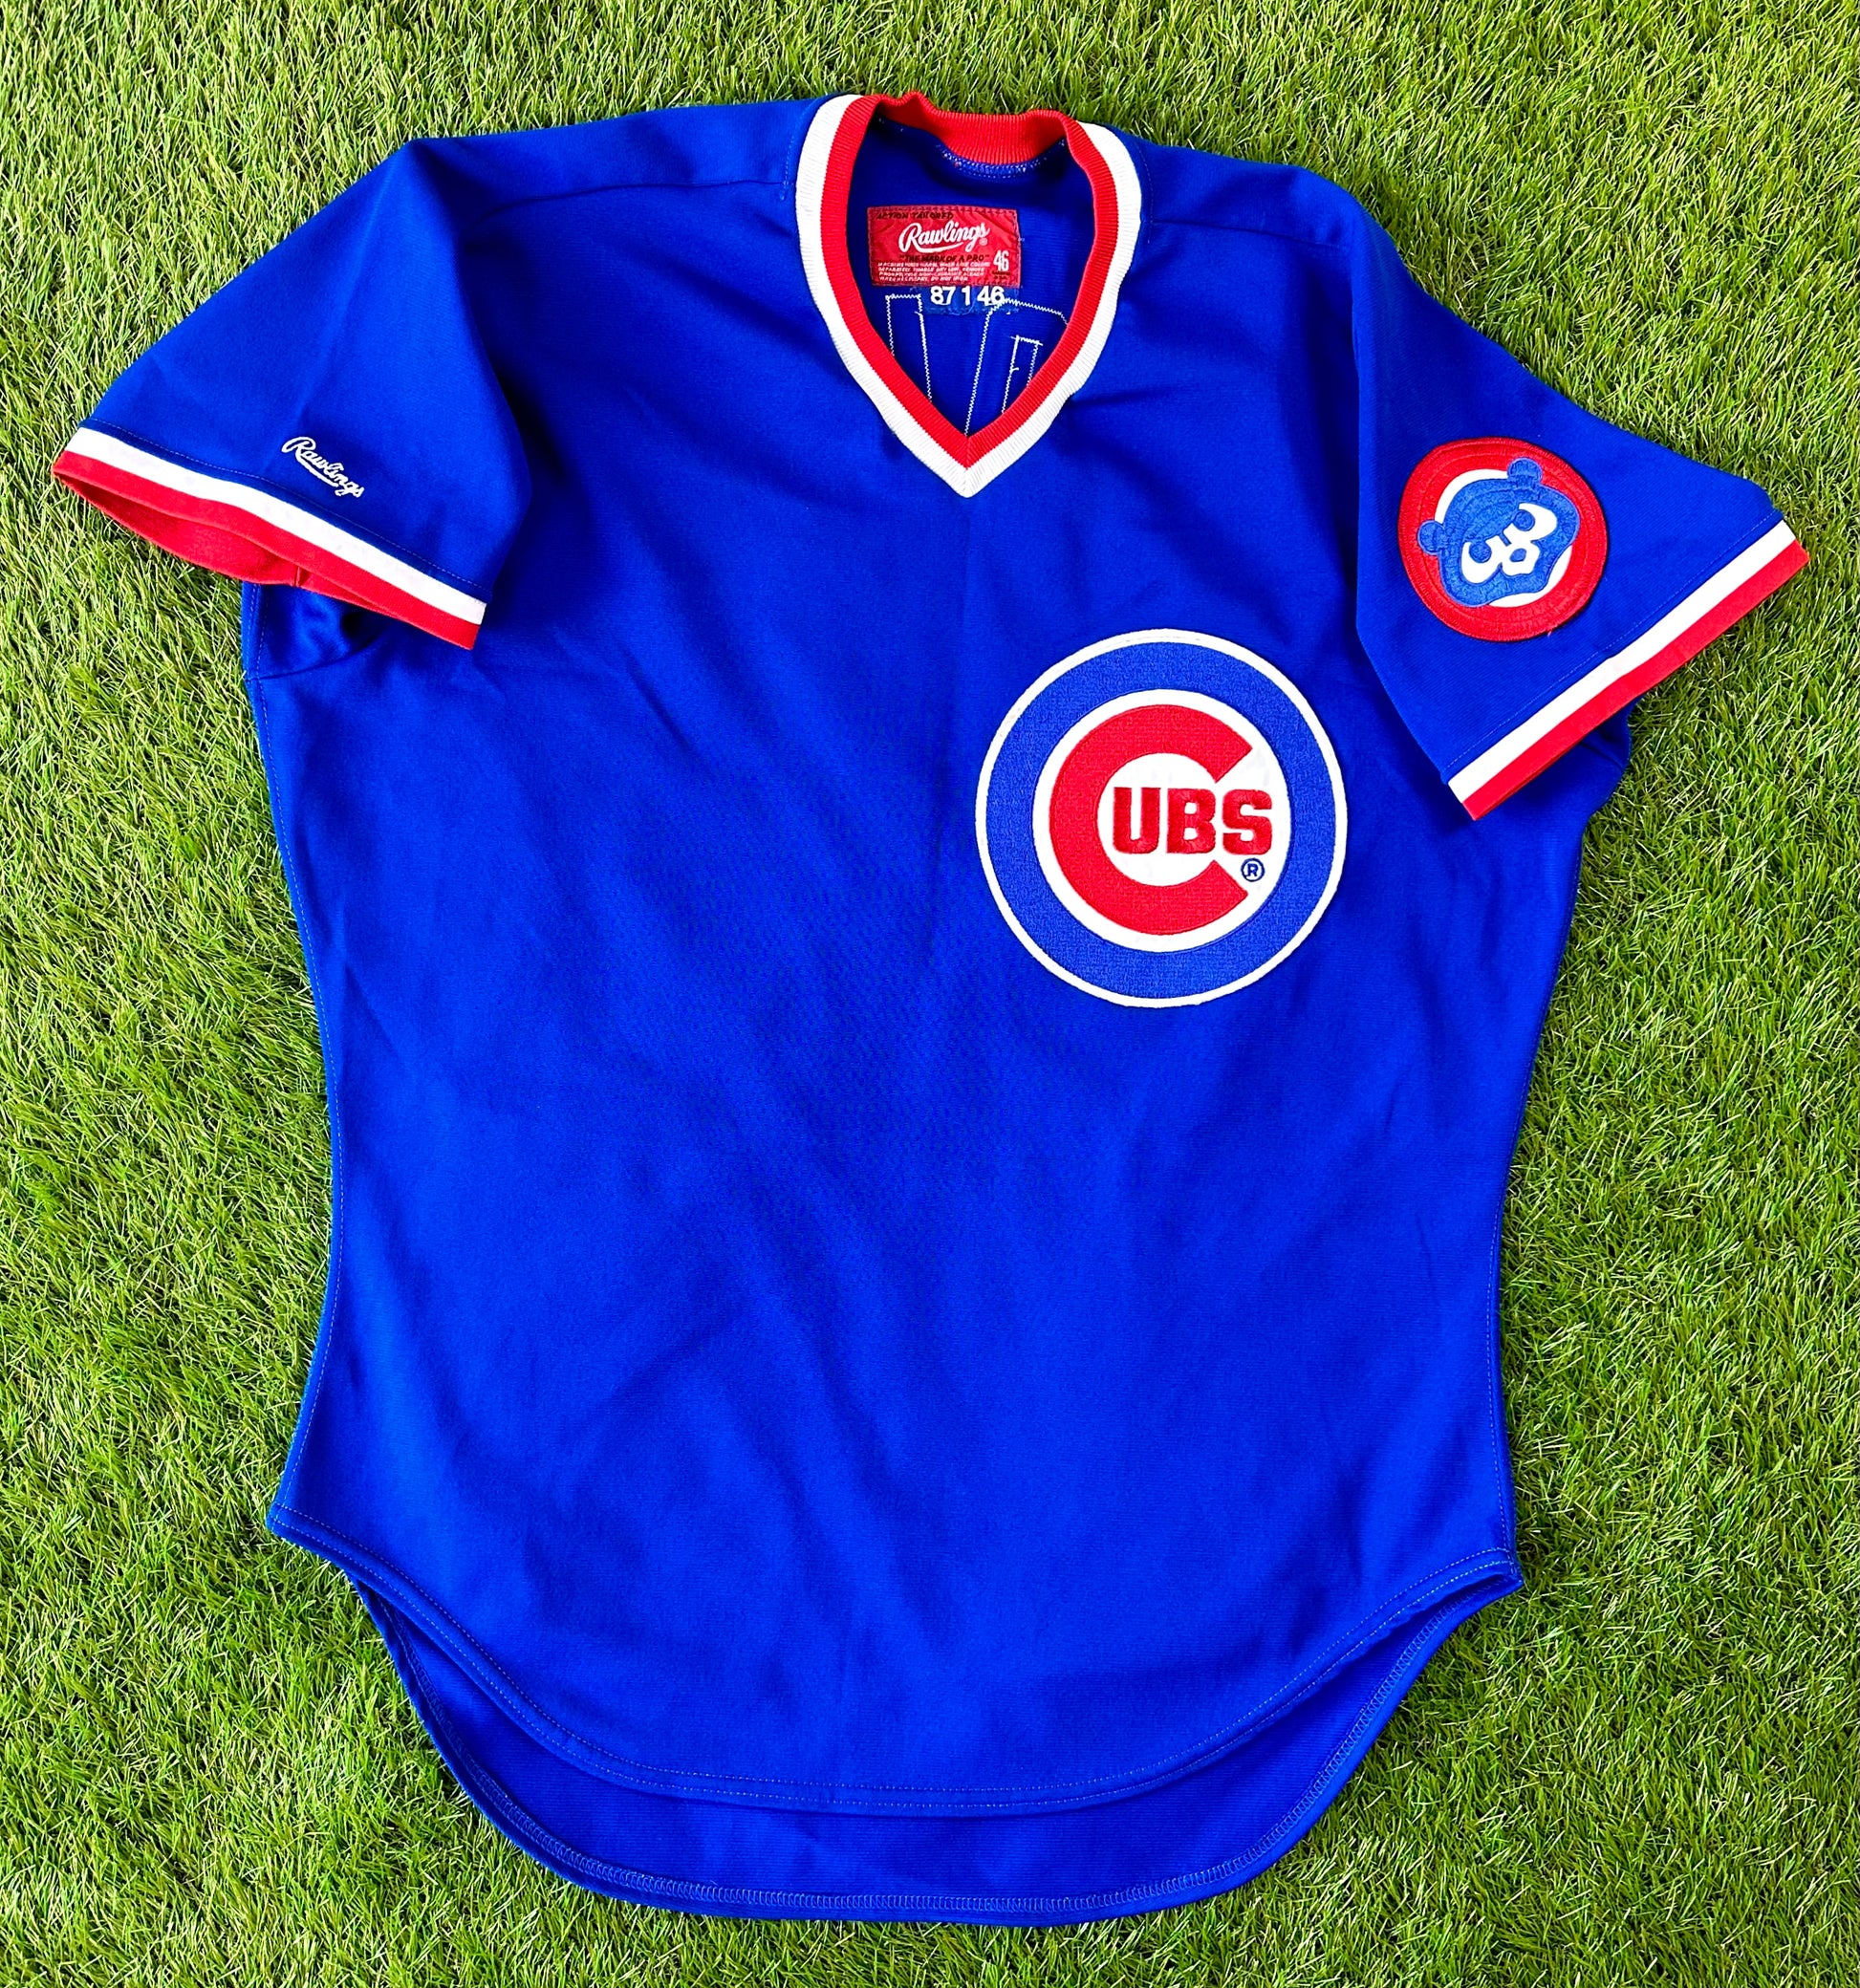 chicago cubs game worn jerseys